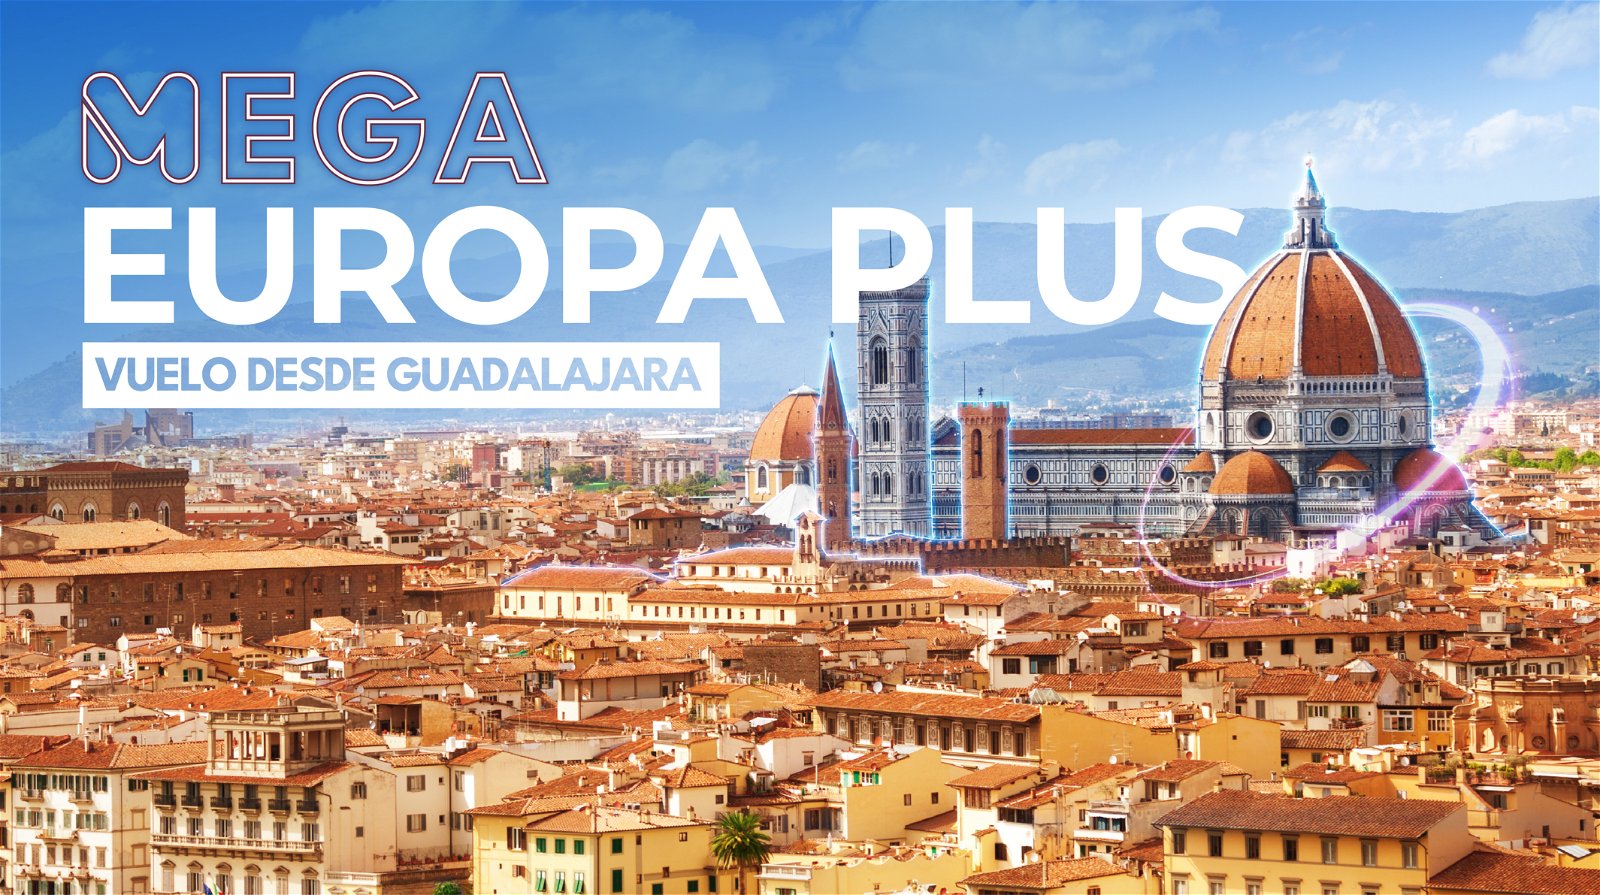 Mega Europa Plus Vuelo desde GDL